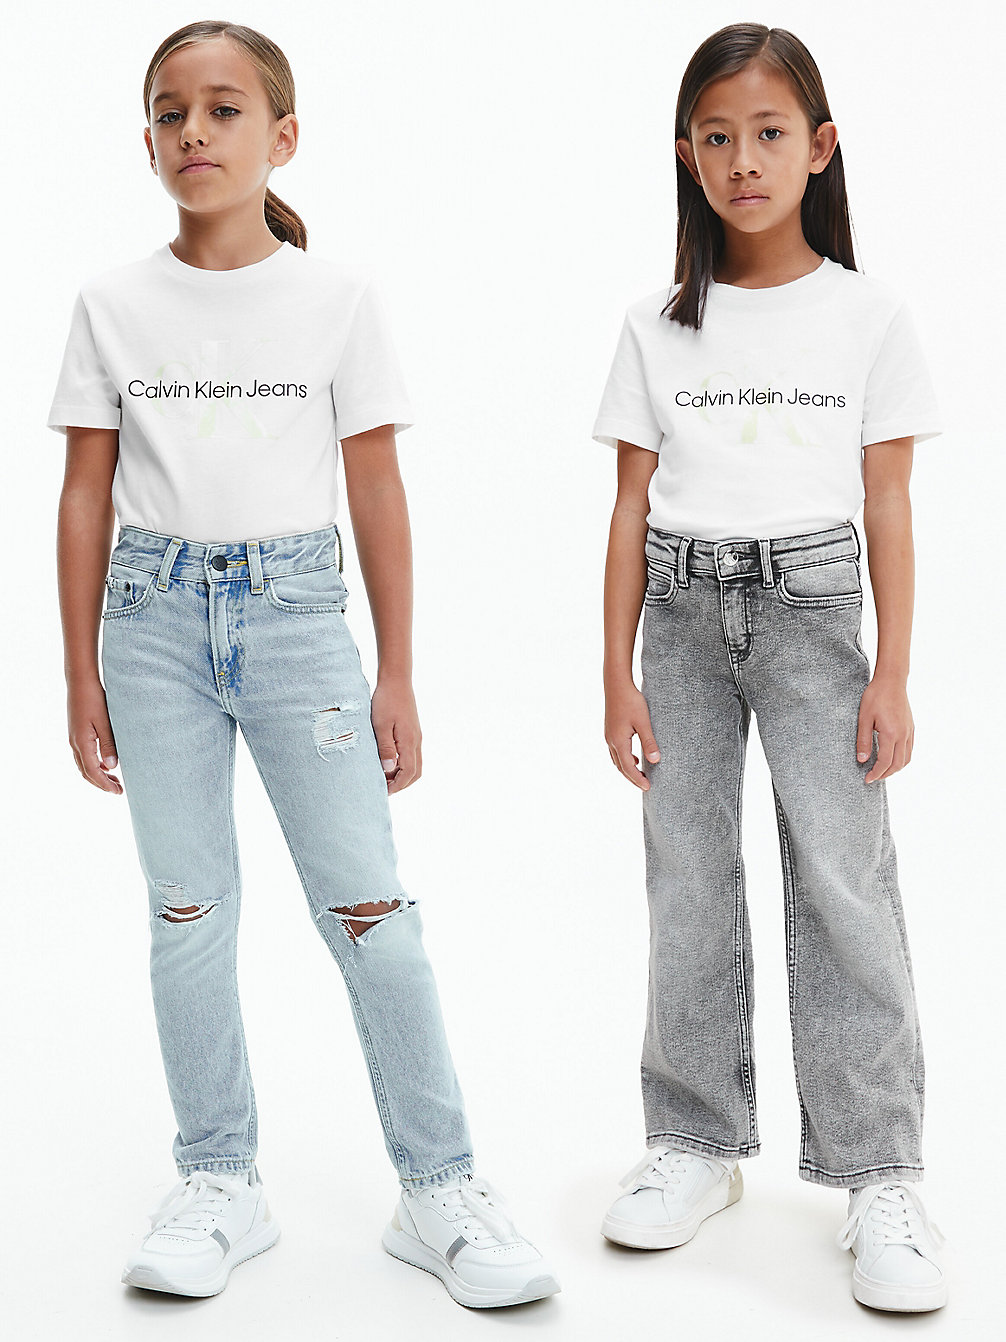 BRIGHT WHITE T-Shirt Unisexe Avec Logo undefined kids unisex Calvin Klein